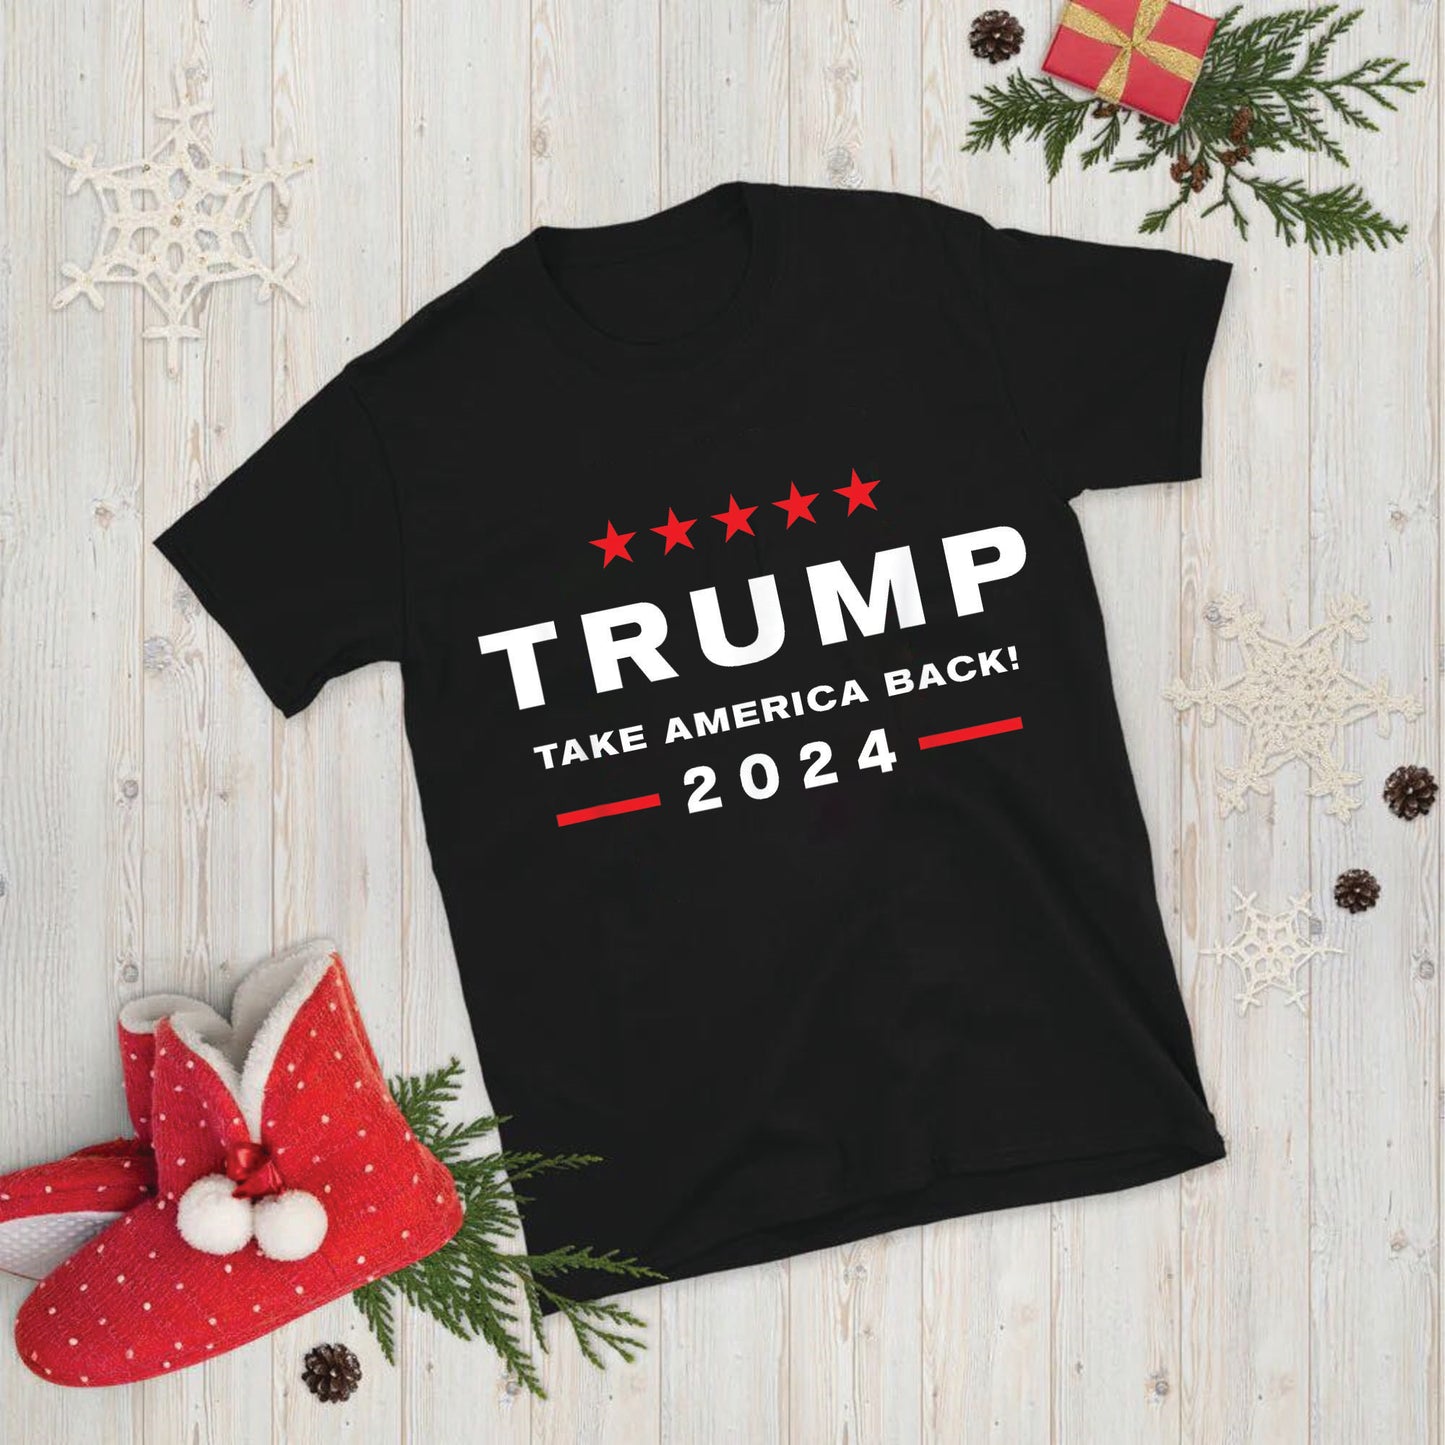 Trump 2024 TAKE AMERICA BACK! Unisex Short-Sleeve T-Shirt